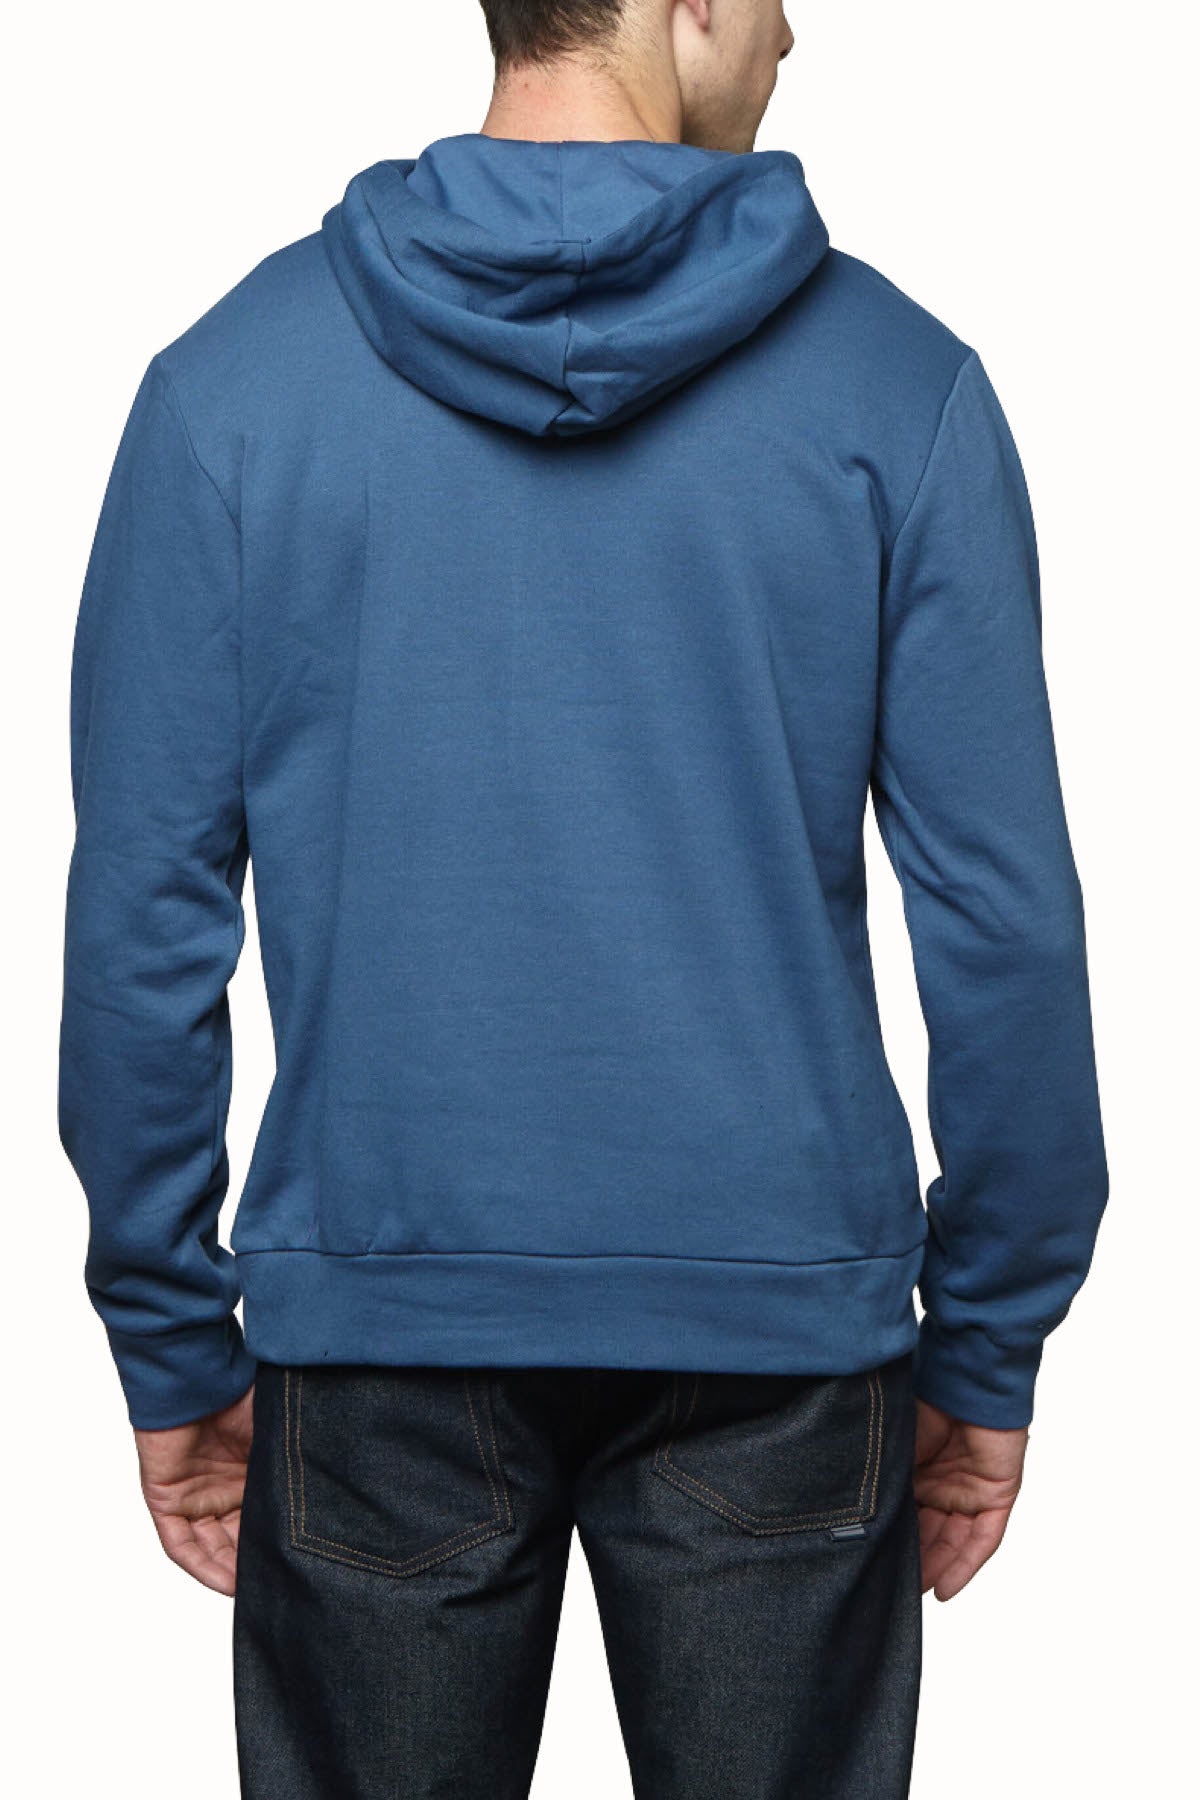 Zutoq Blue Zunked Hooded Sweatshirt